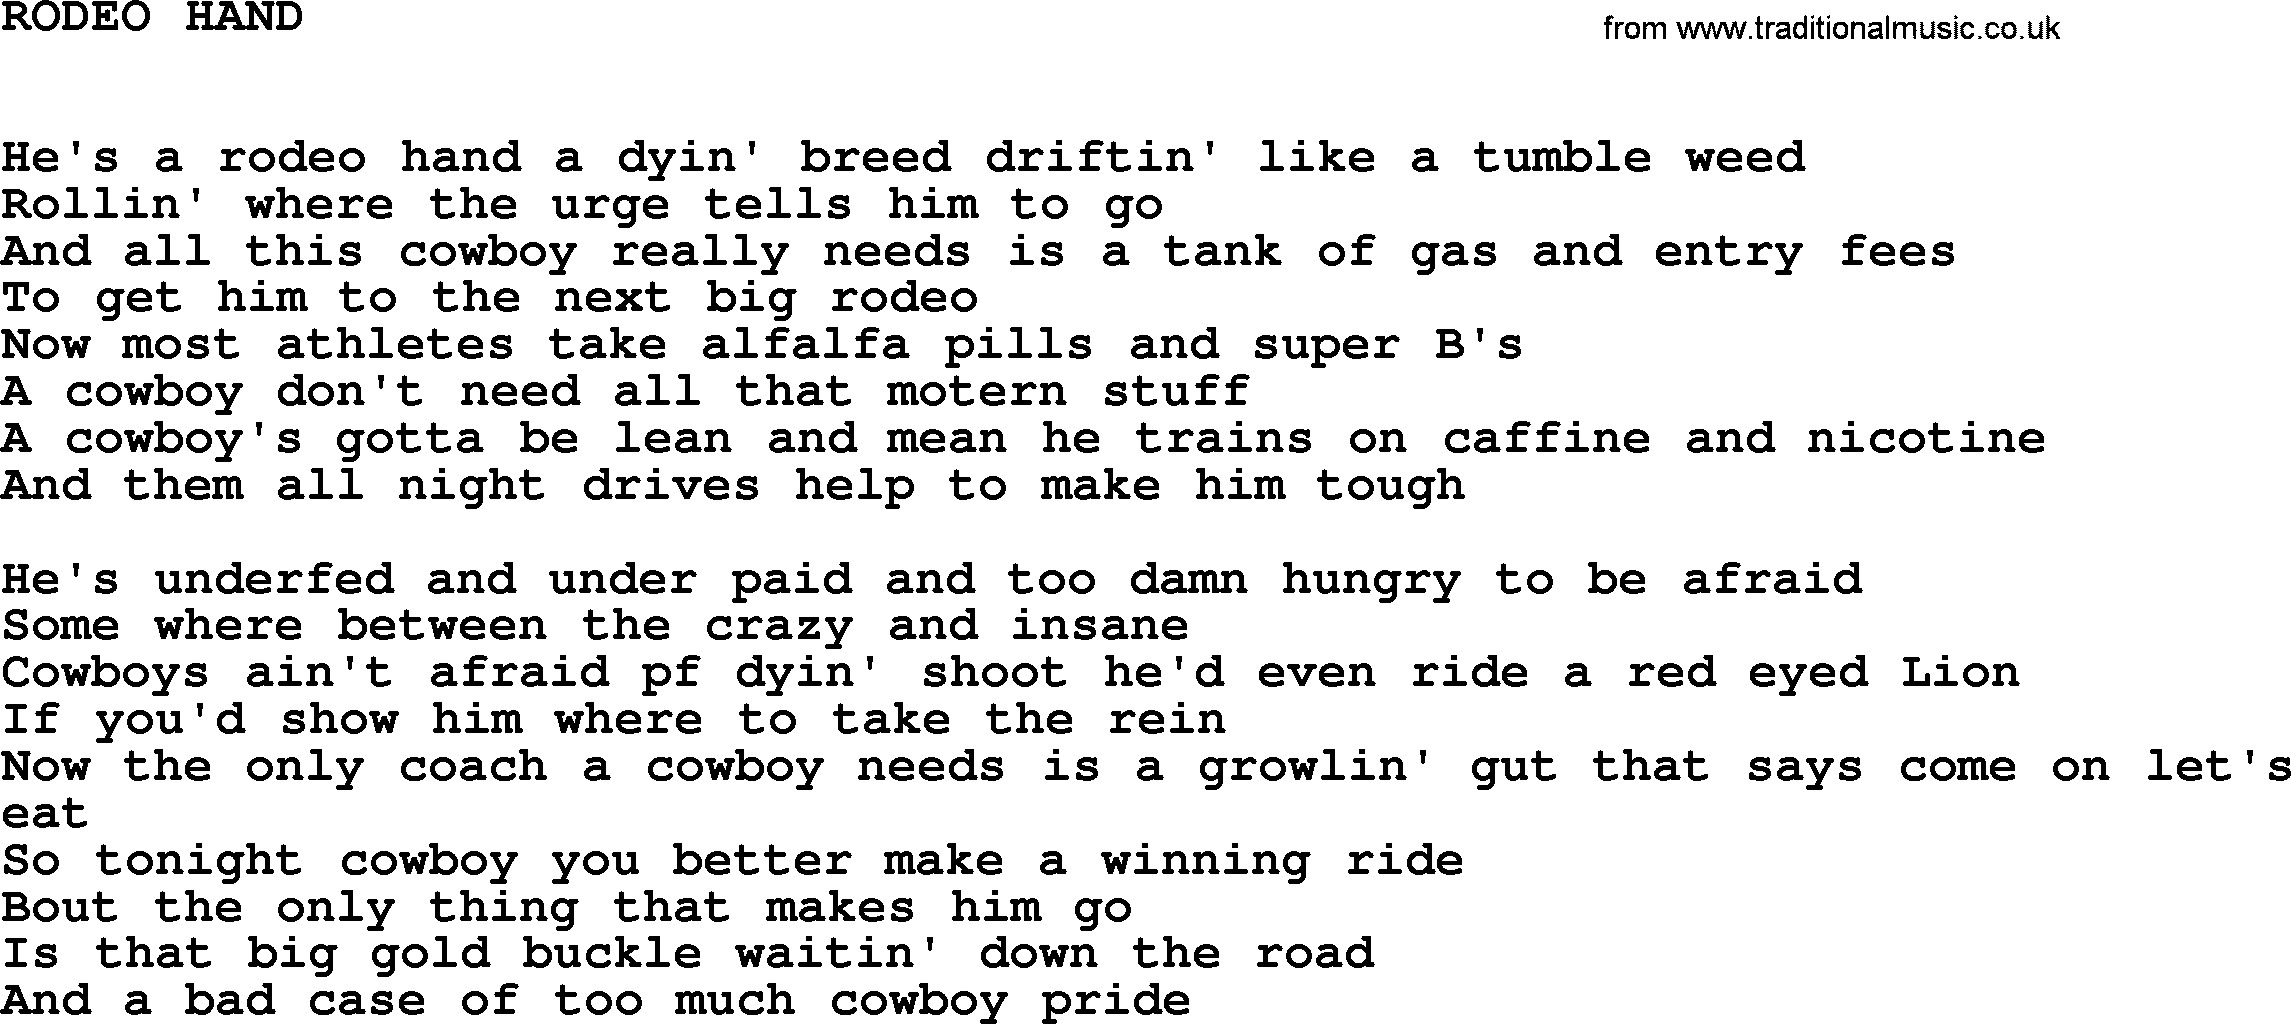 Johnny Cash song Rodeo Hand.txt lyrics